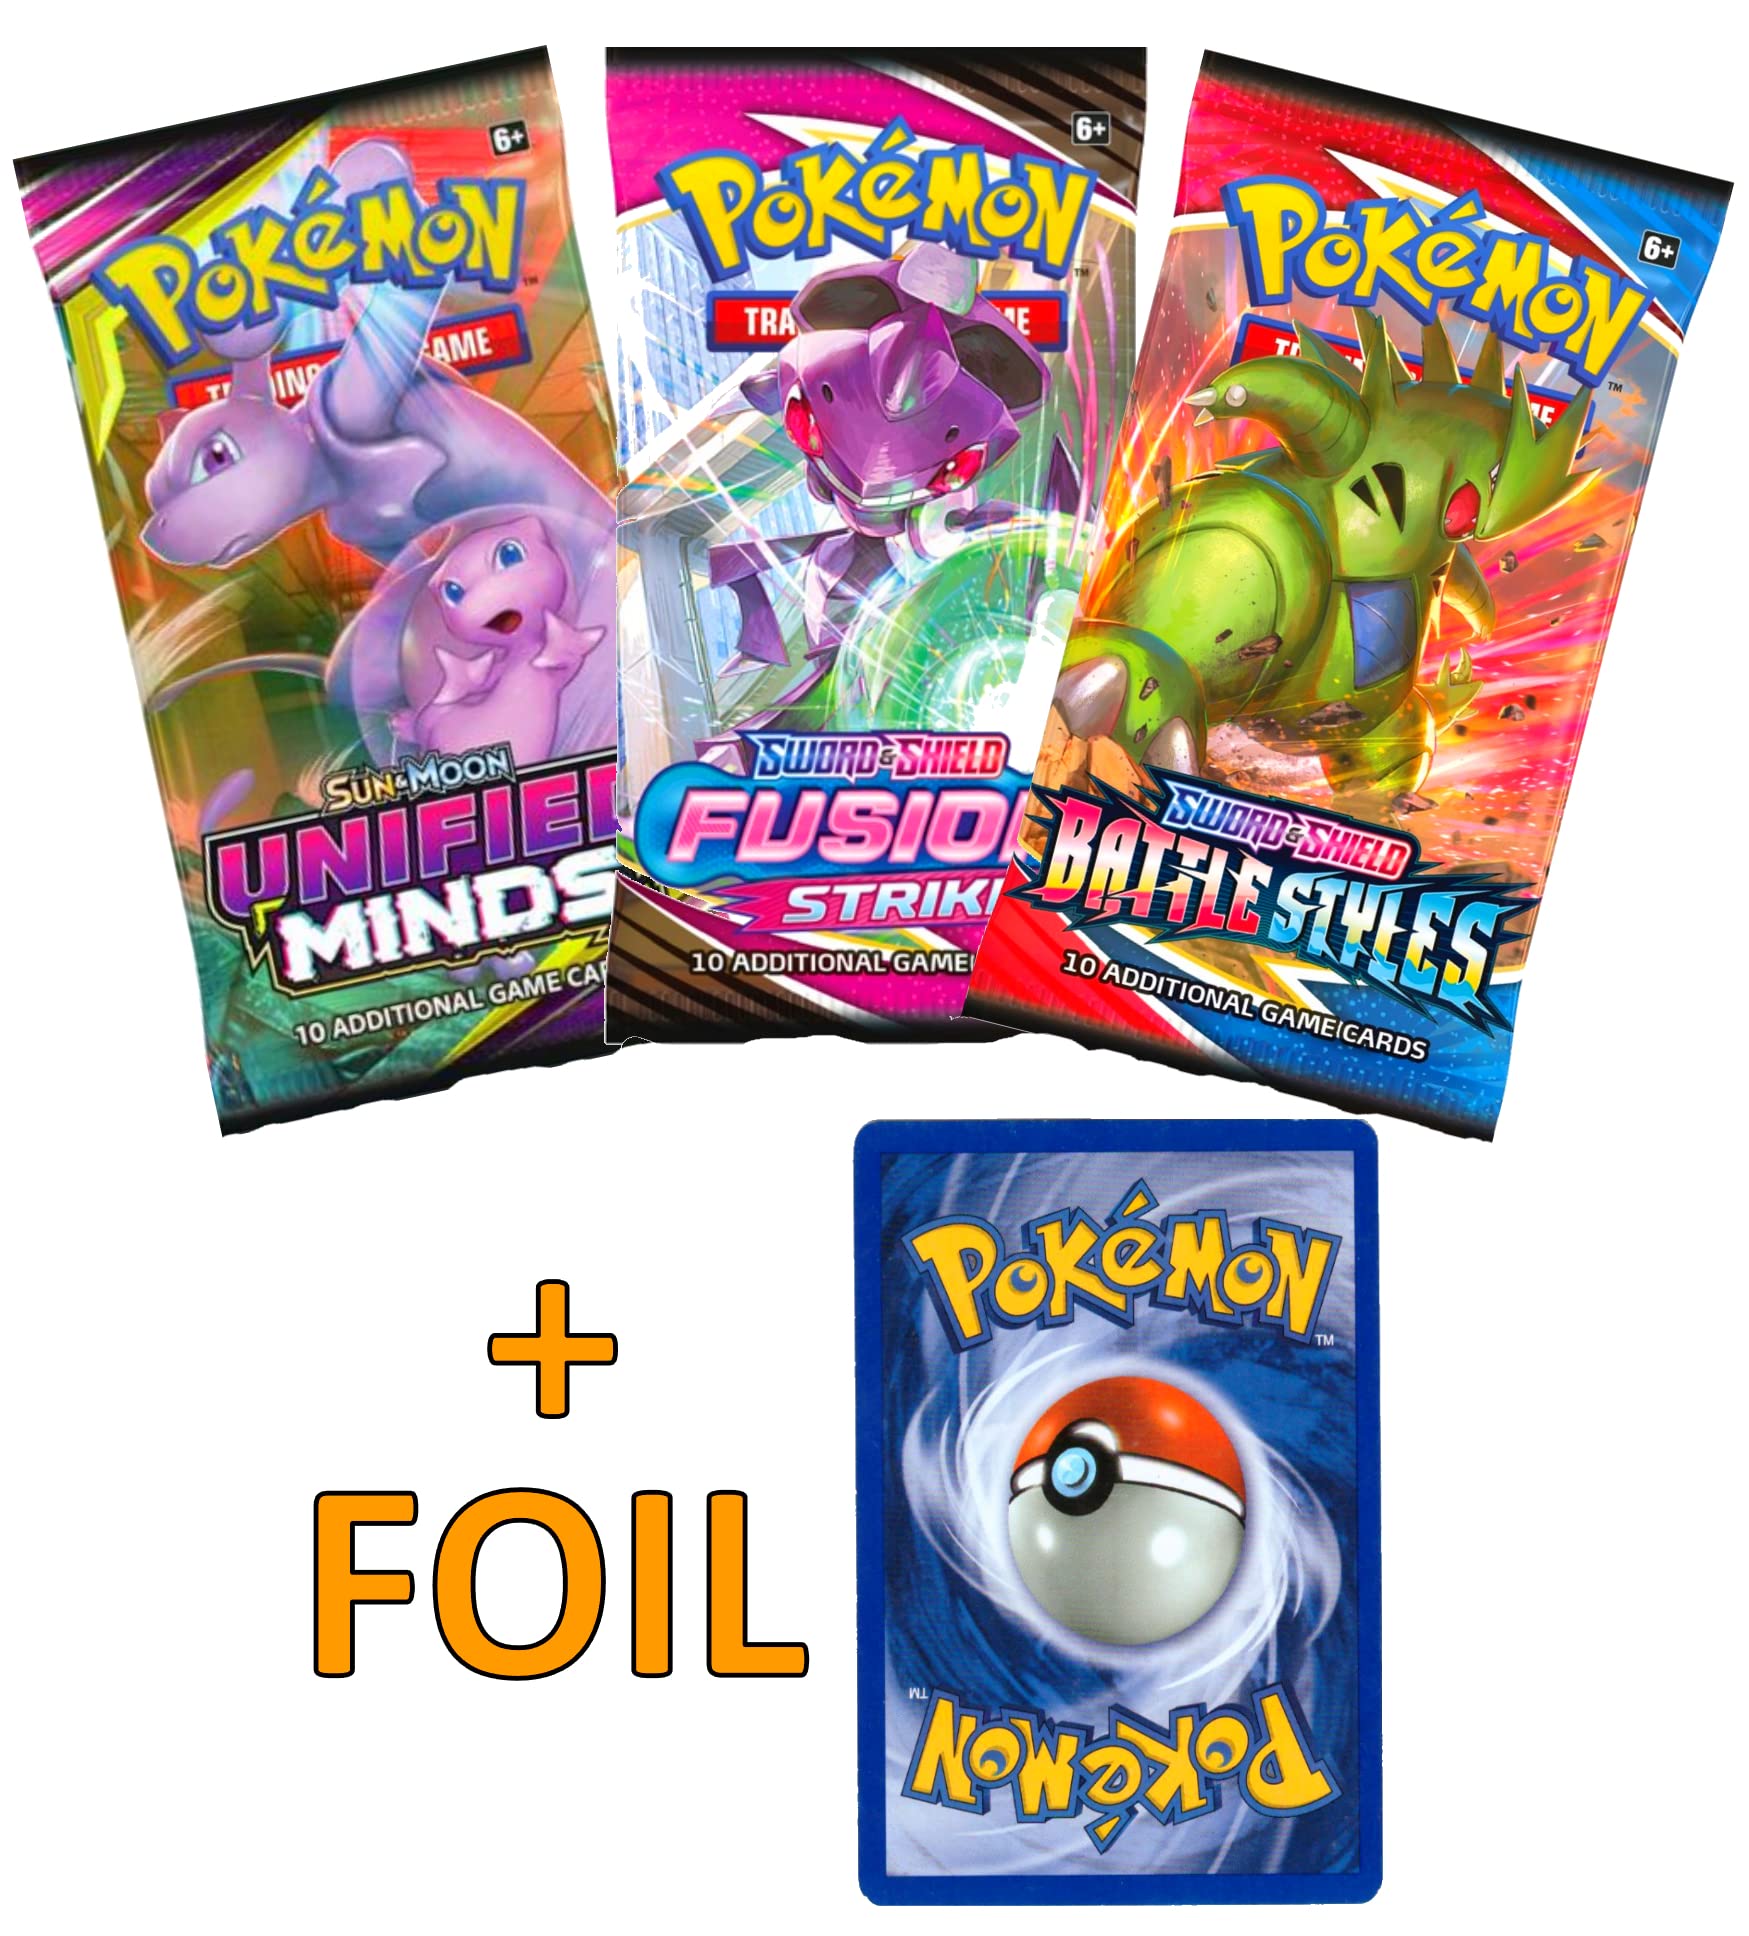 Pokemon TCG: 3 Booster Packs & 1 Random Foil | Includes 3 Blister Packs of Random Cards & 1 Individually Packed Holofoil Promo Card, 097712556710